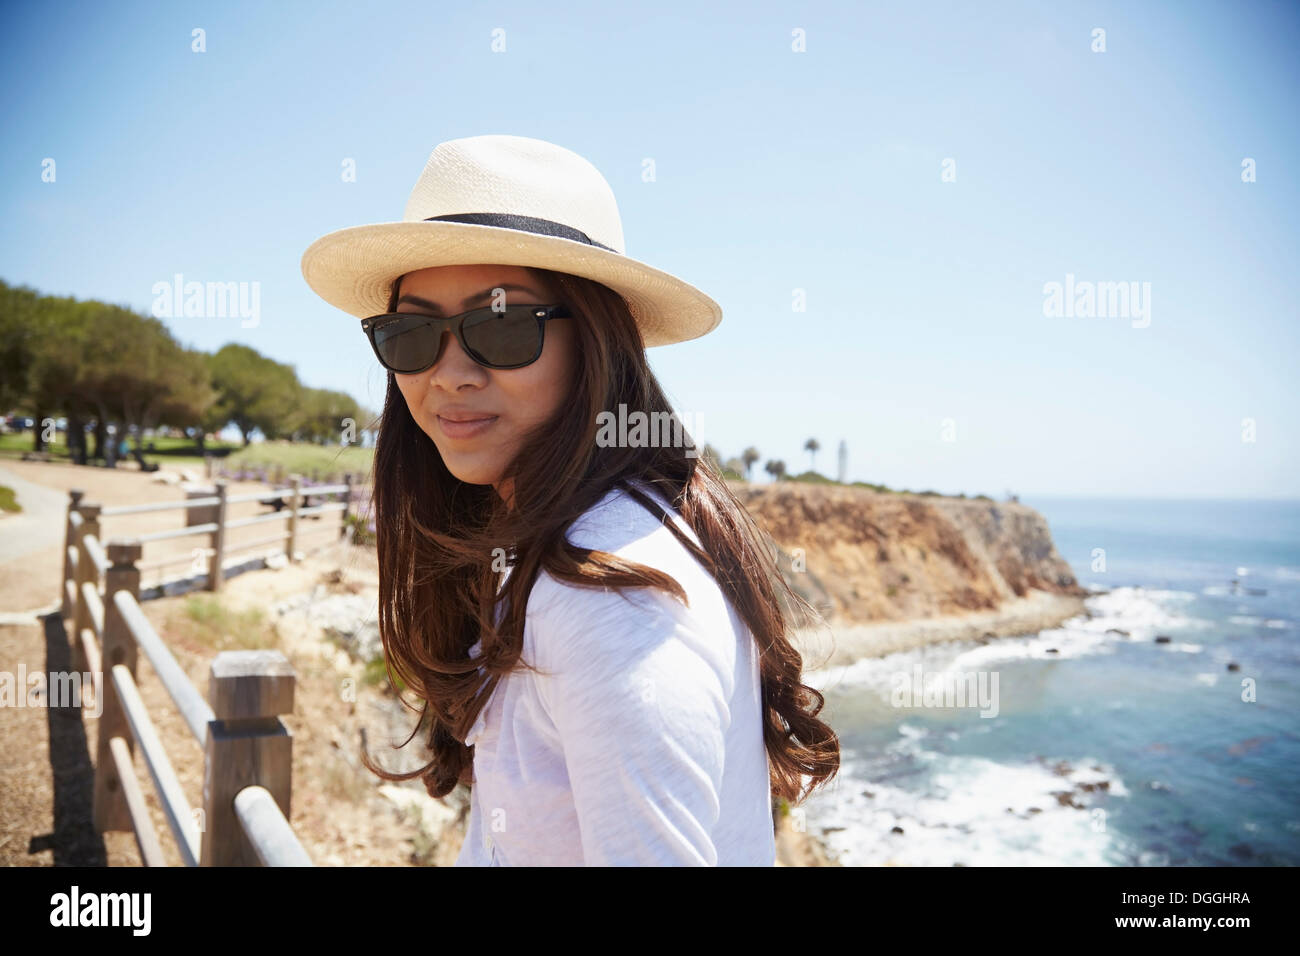 Portrait of young woman wearing sunhat, Palos Verdes, California, USA Banque D'Images